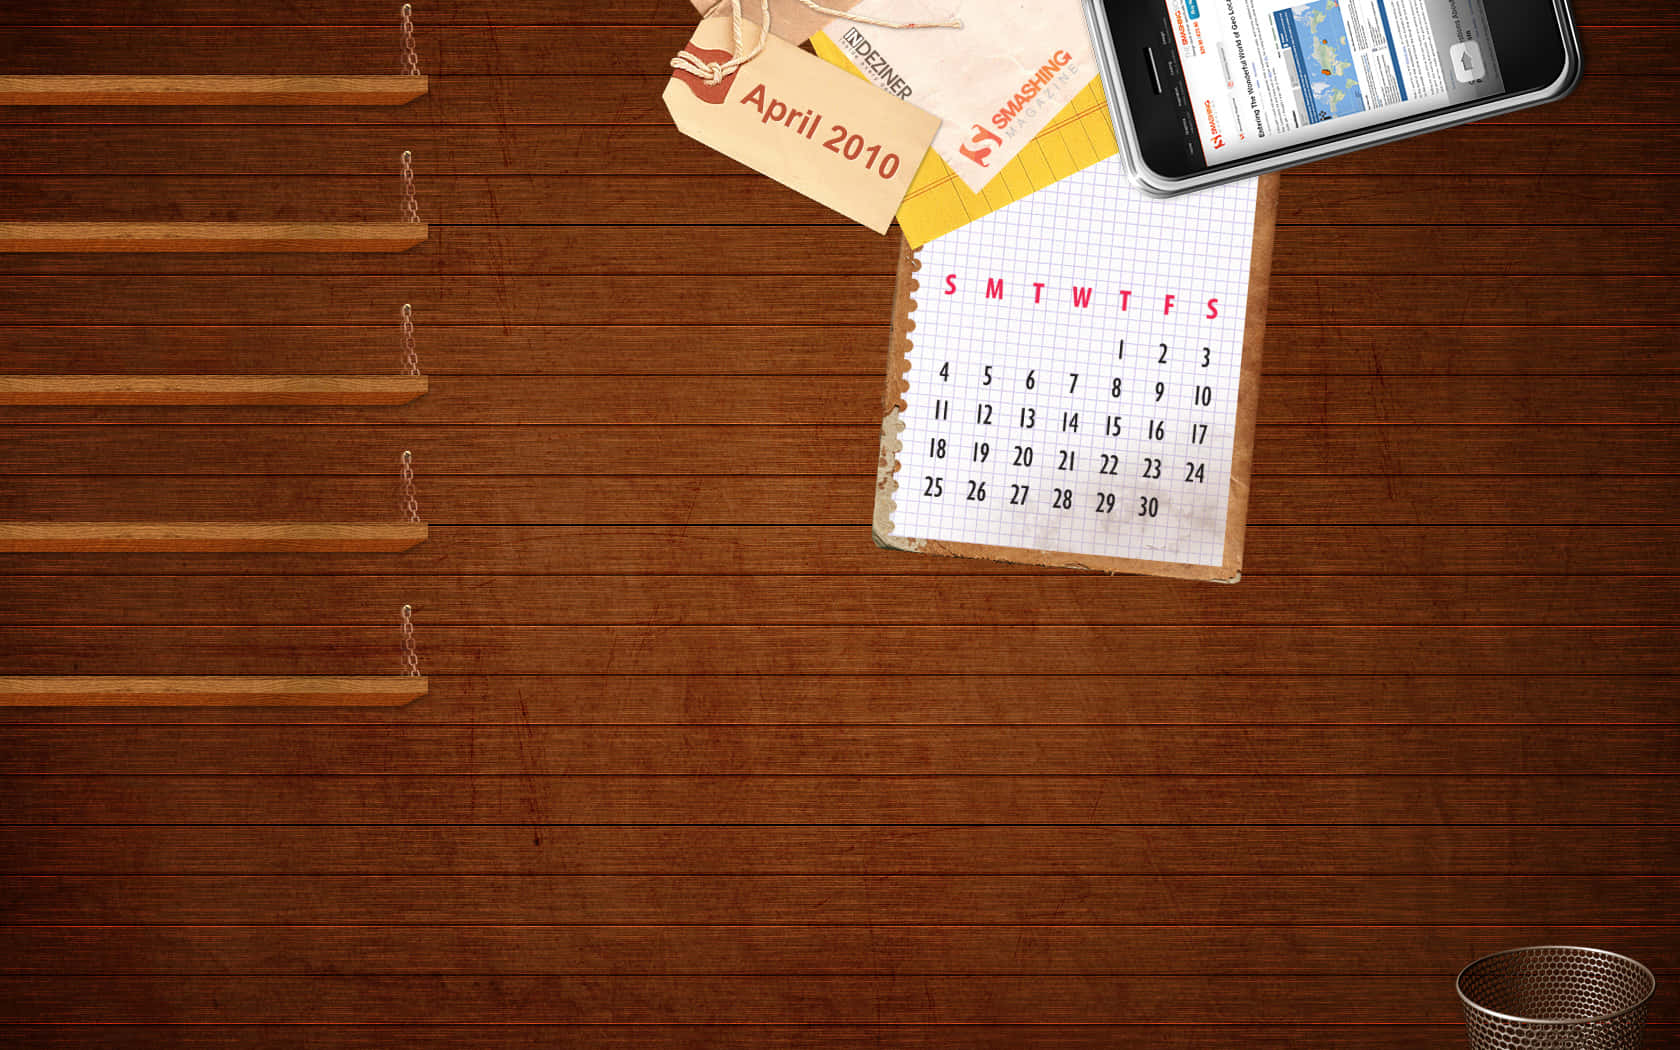 A Desk With A Calendar And A Phone